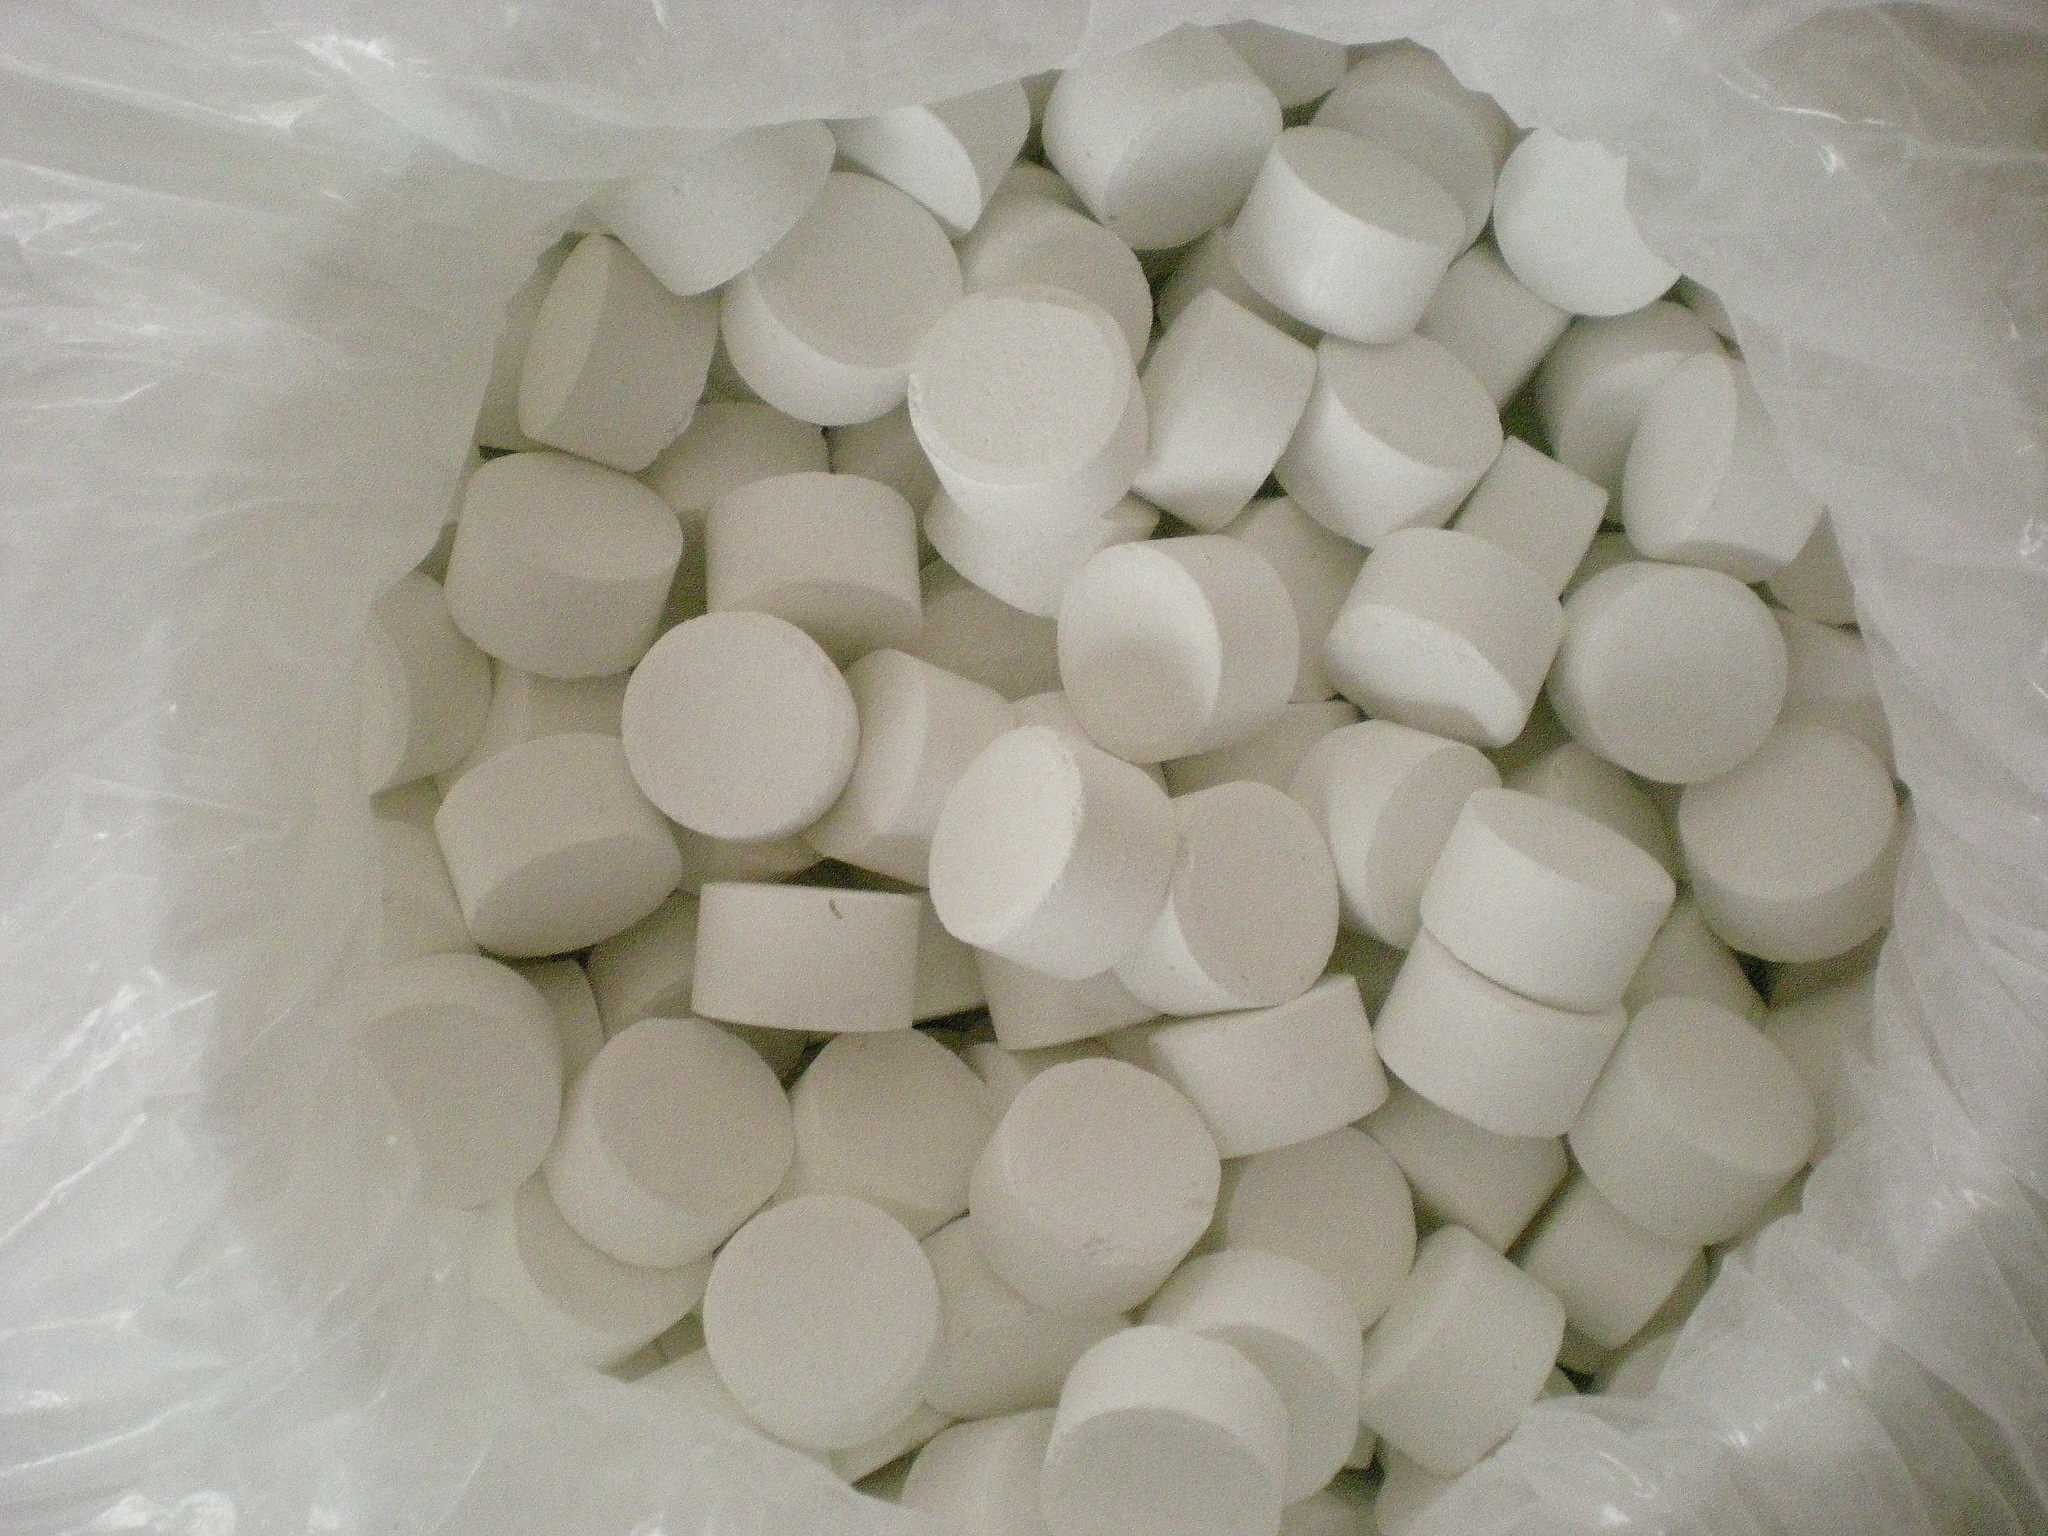 SDIC (дихлоризоцианурат натрия) таблетка белого цвета, гранулированная CAS: 2893-78-9